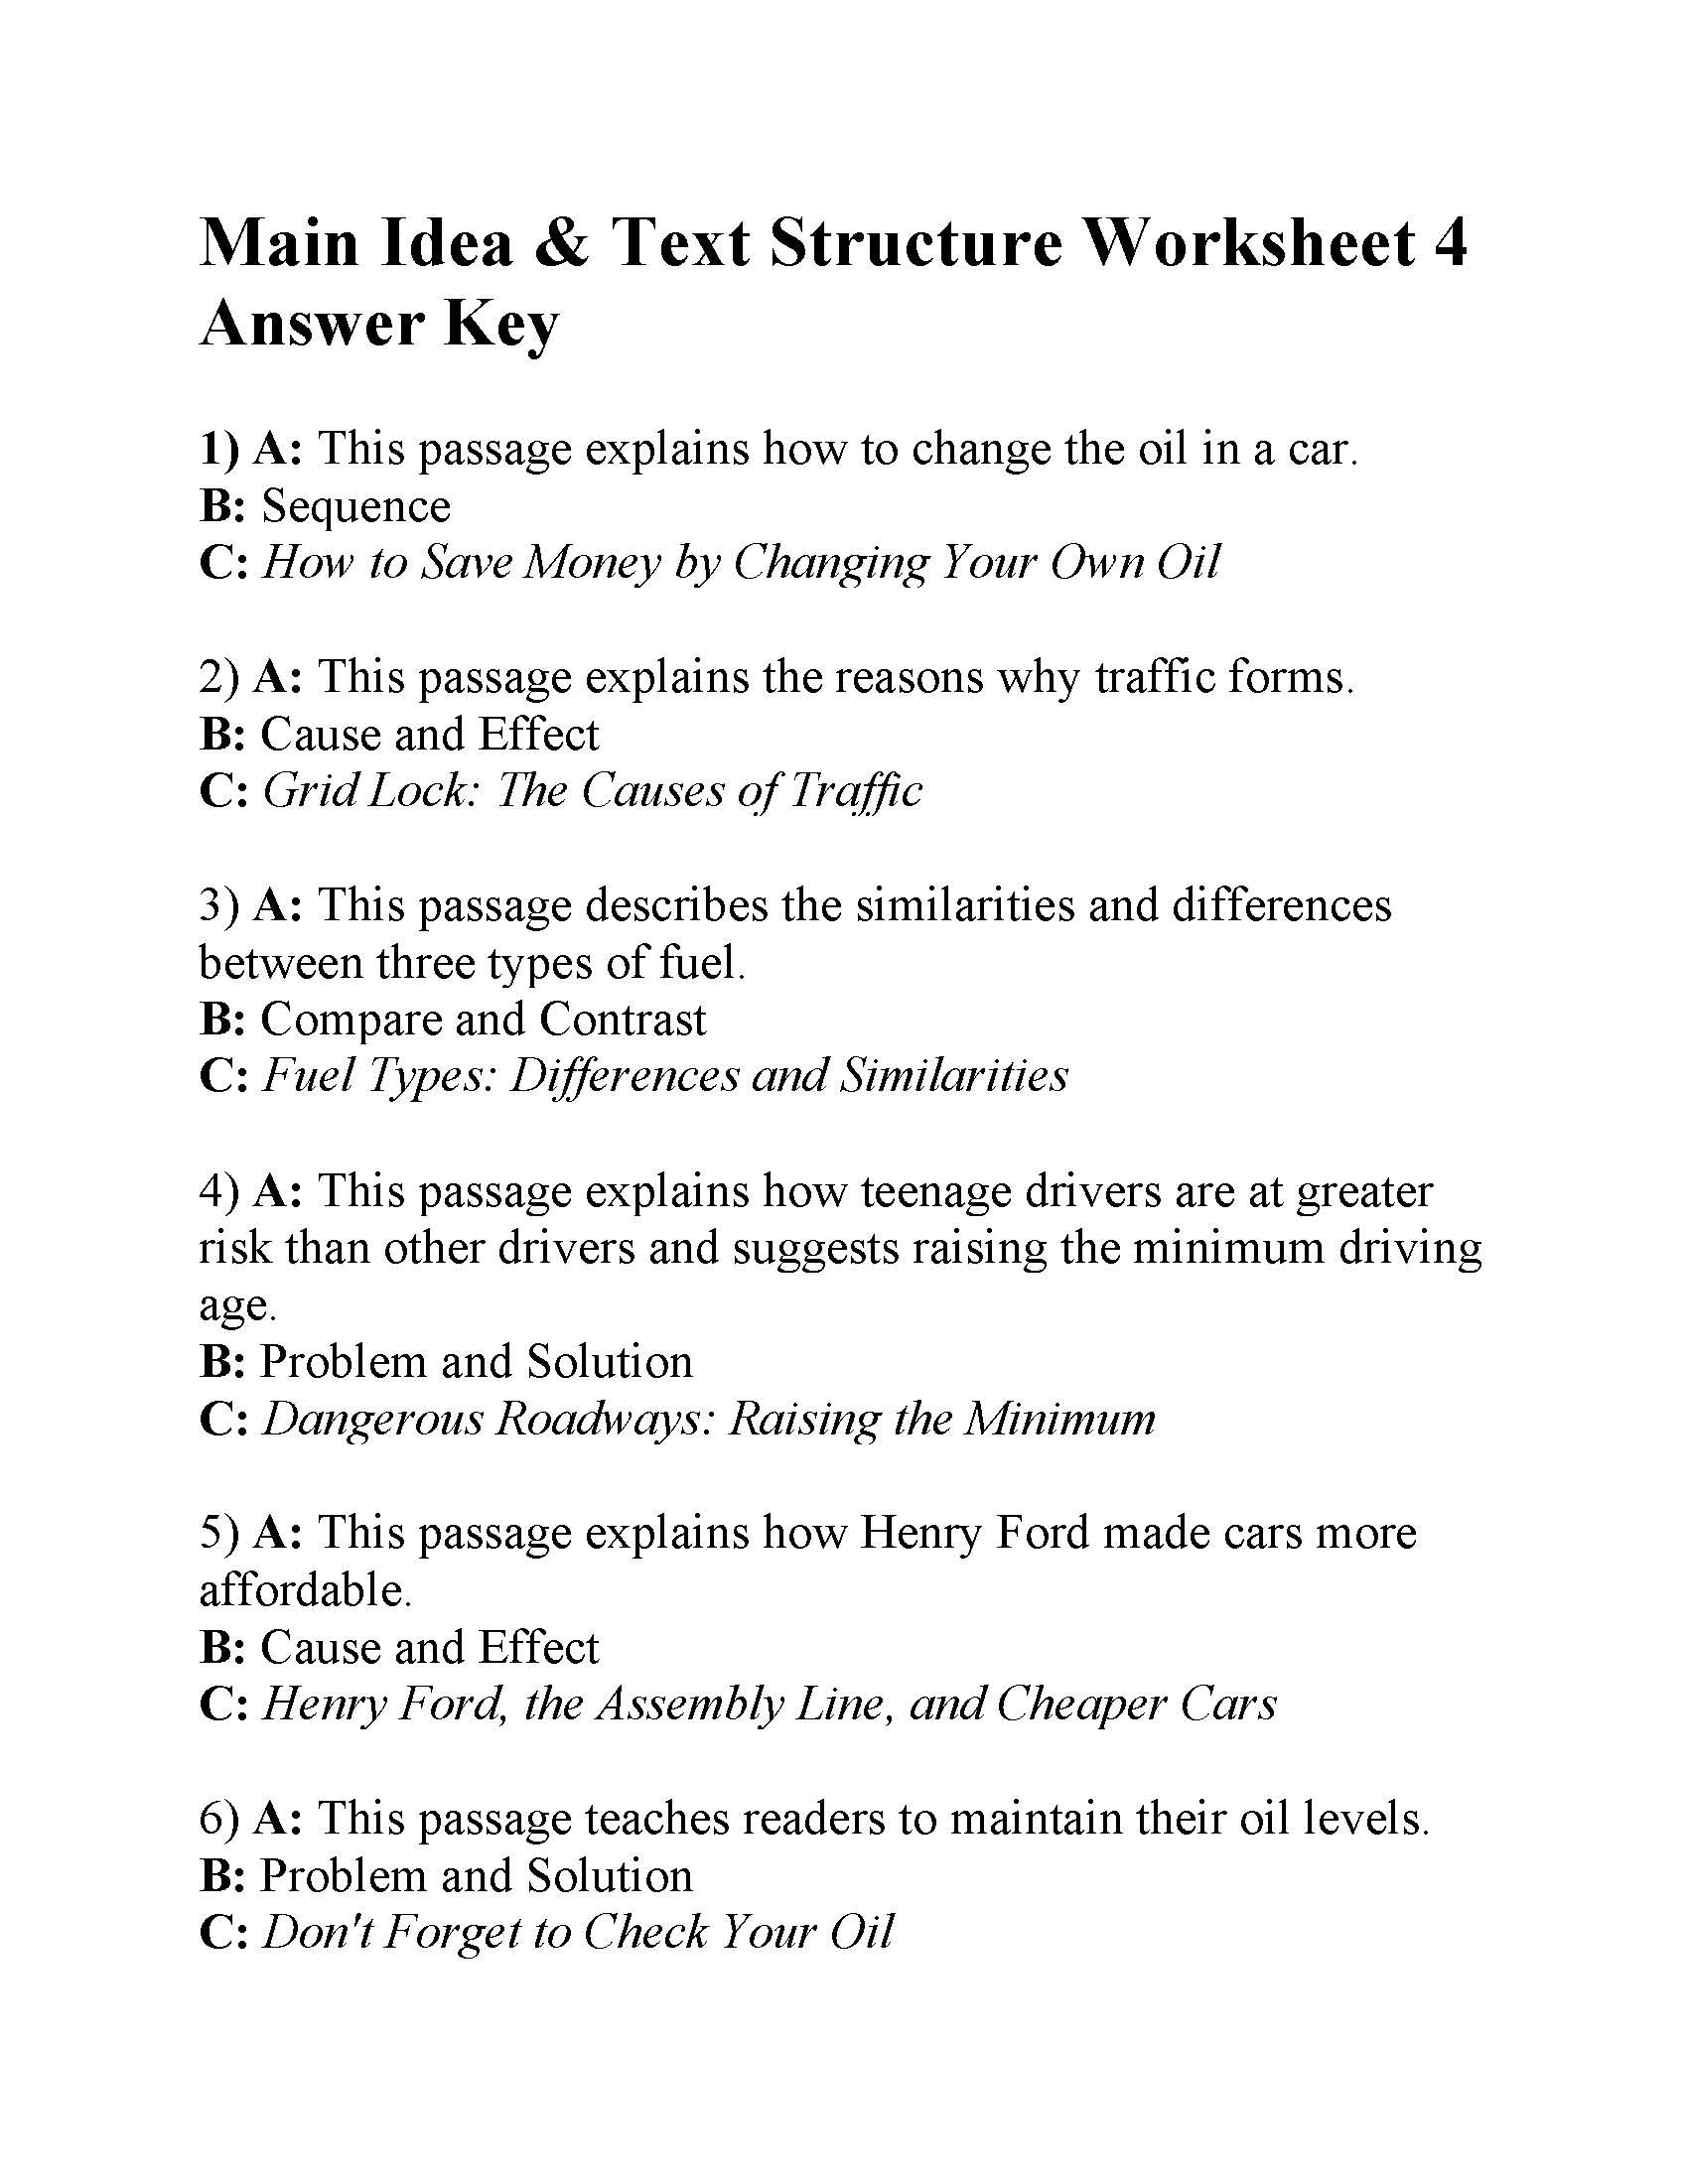 Main Idea Worksheet 4 Main Idea and Text Structure Worksheet 4